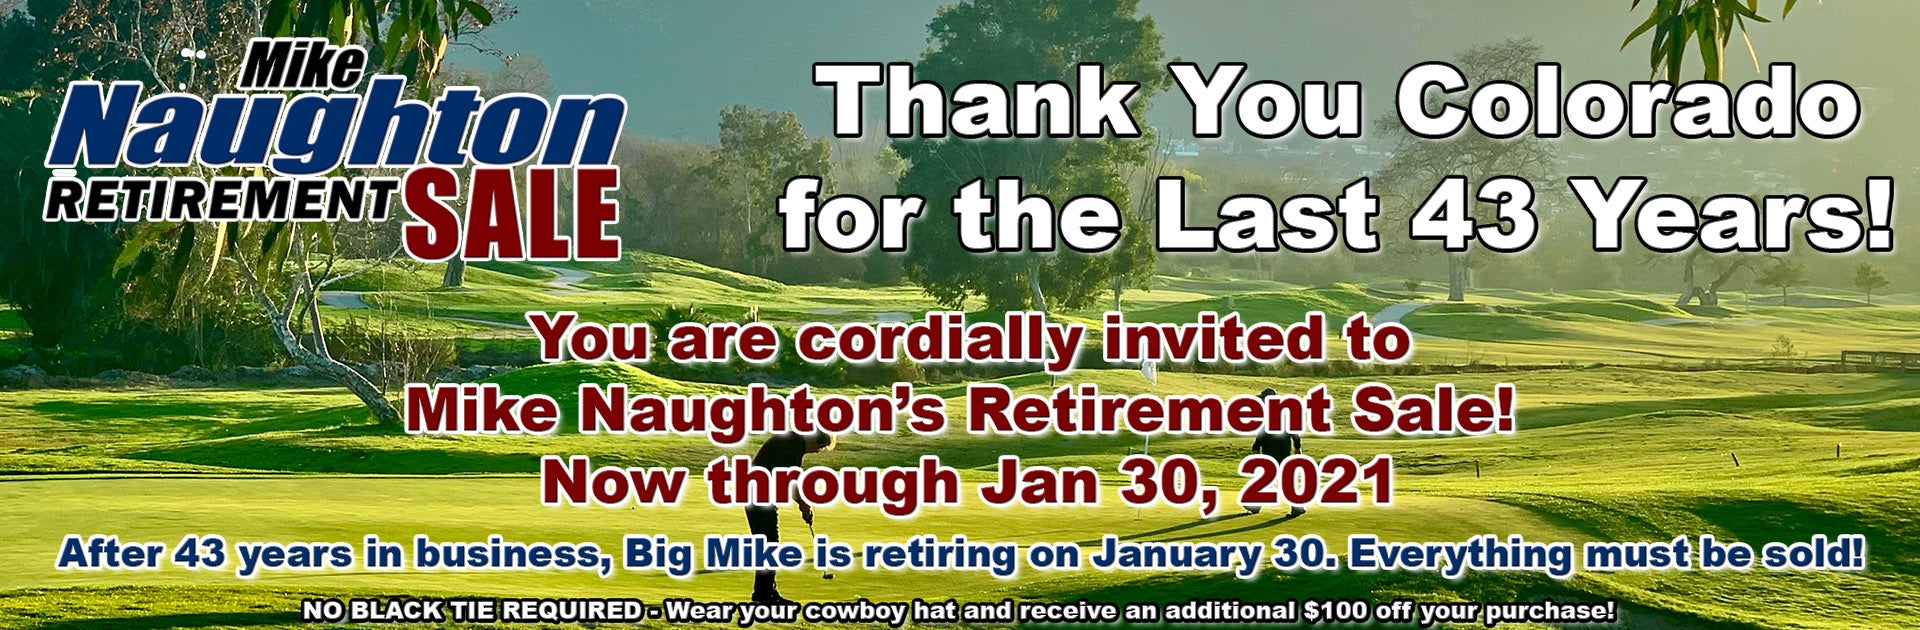 Mike Naughton Retirement Sale